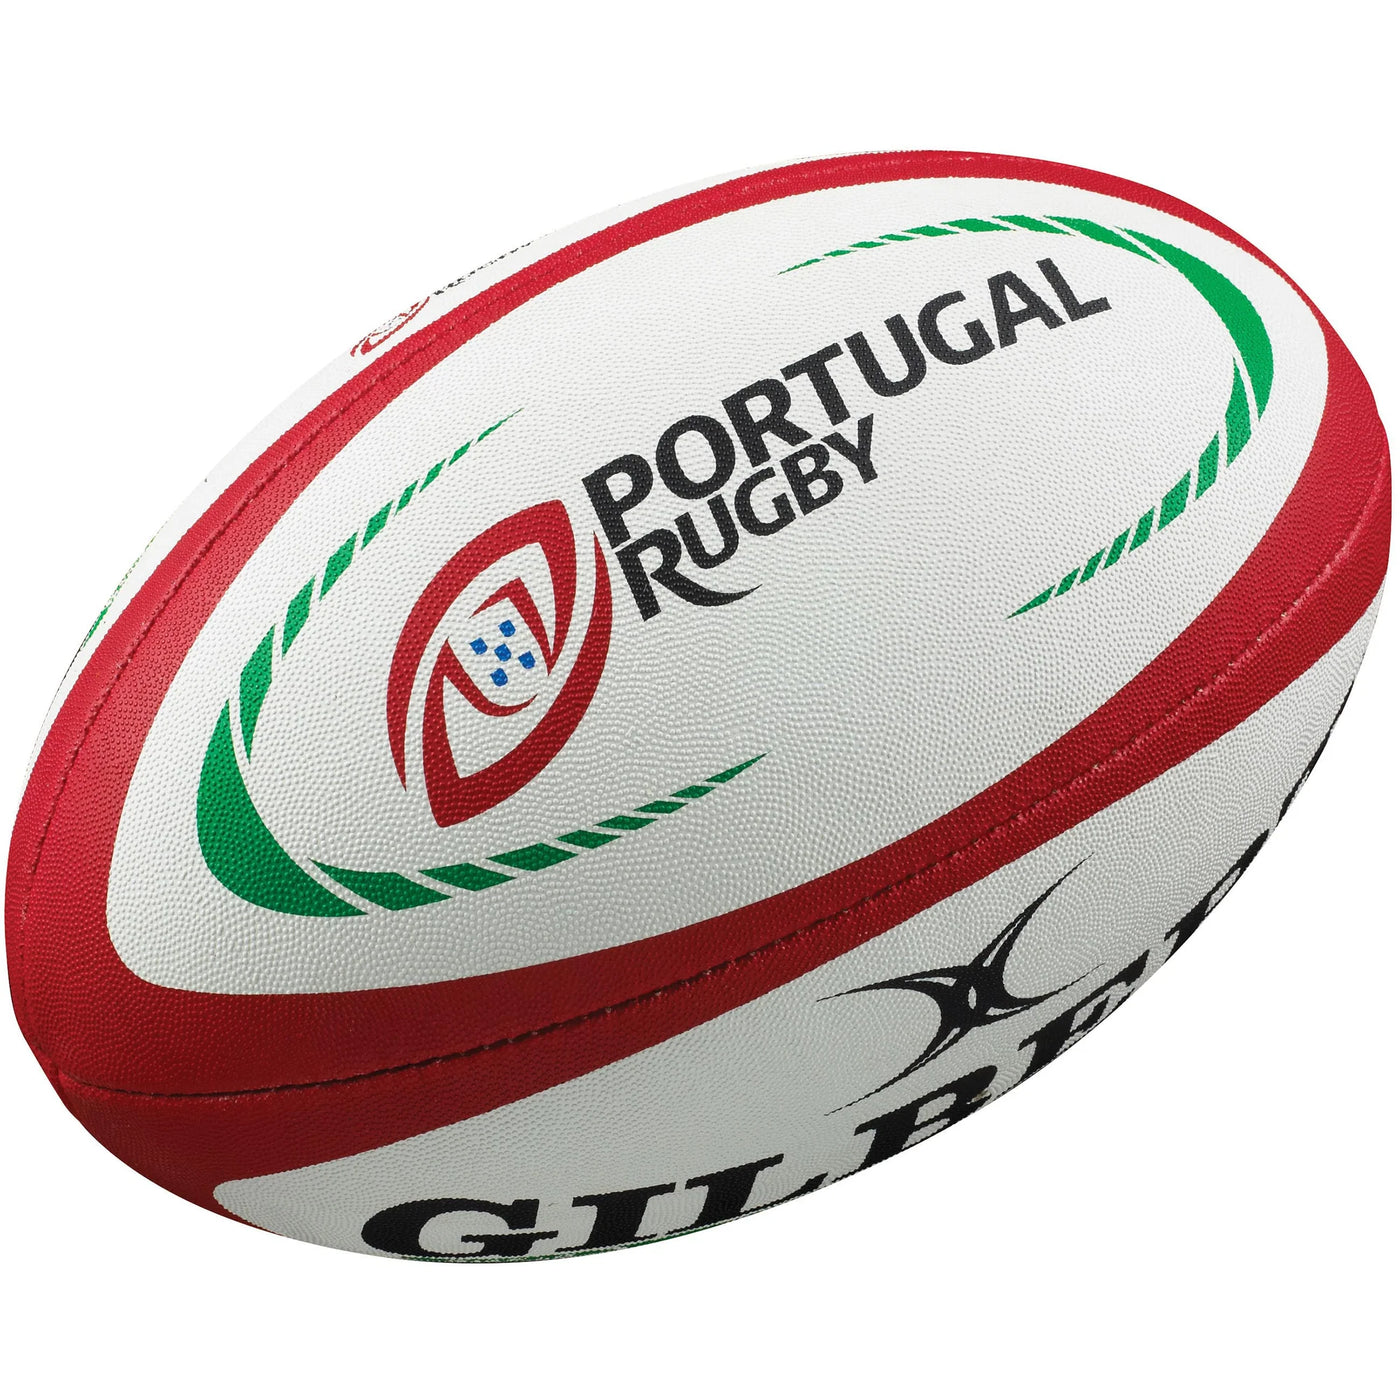 Portugal Replica Rugby Bal